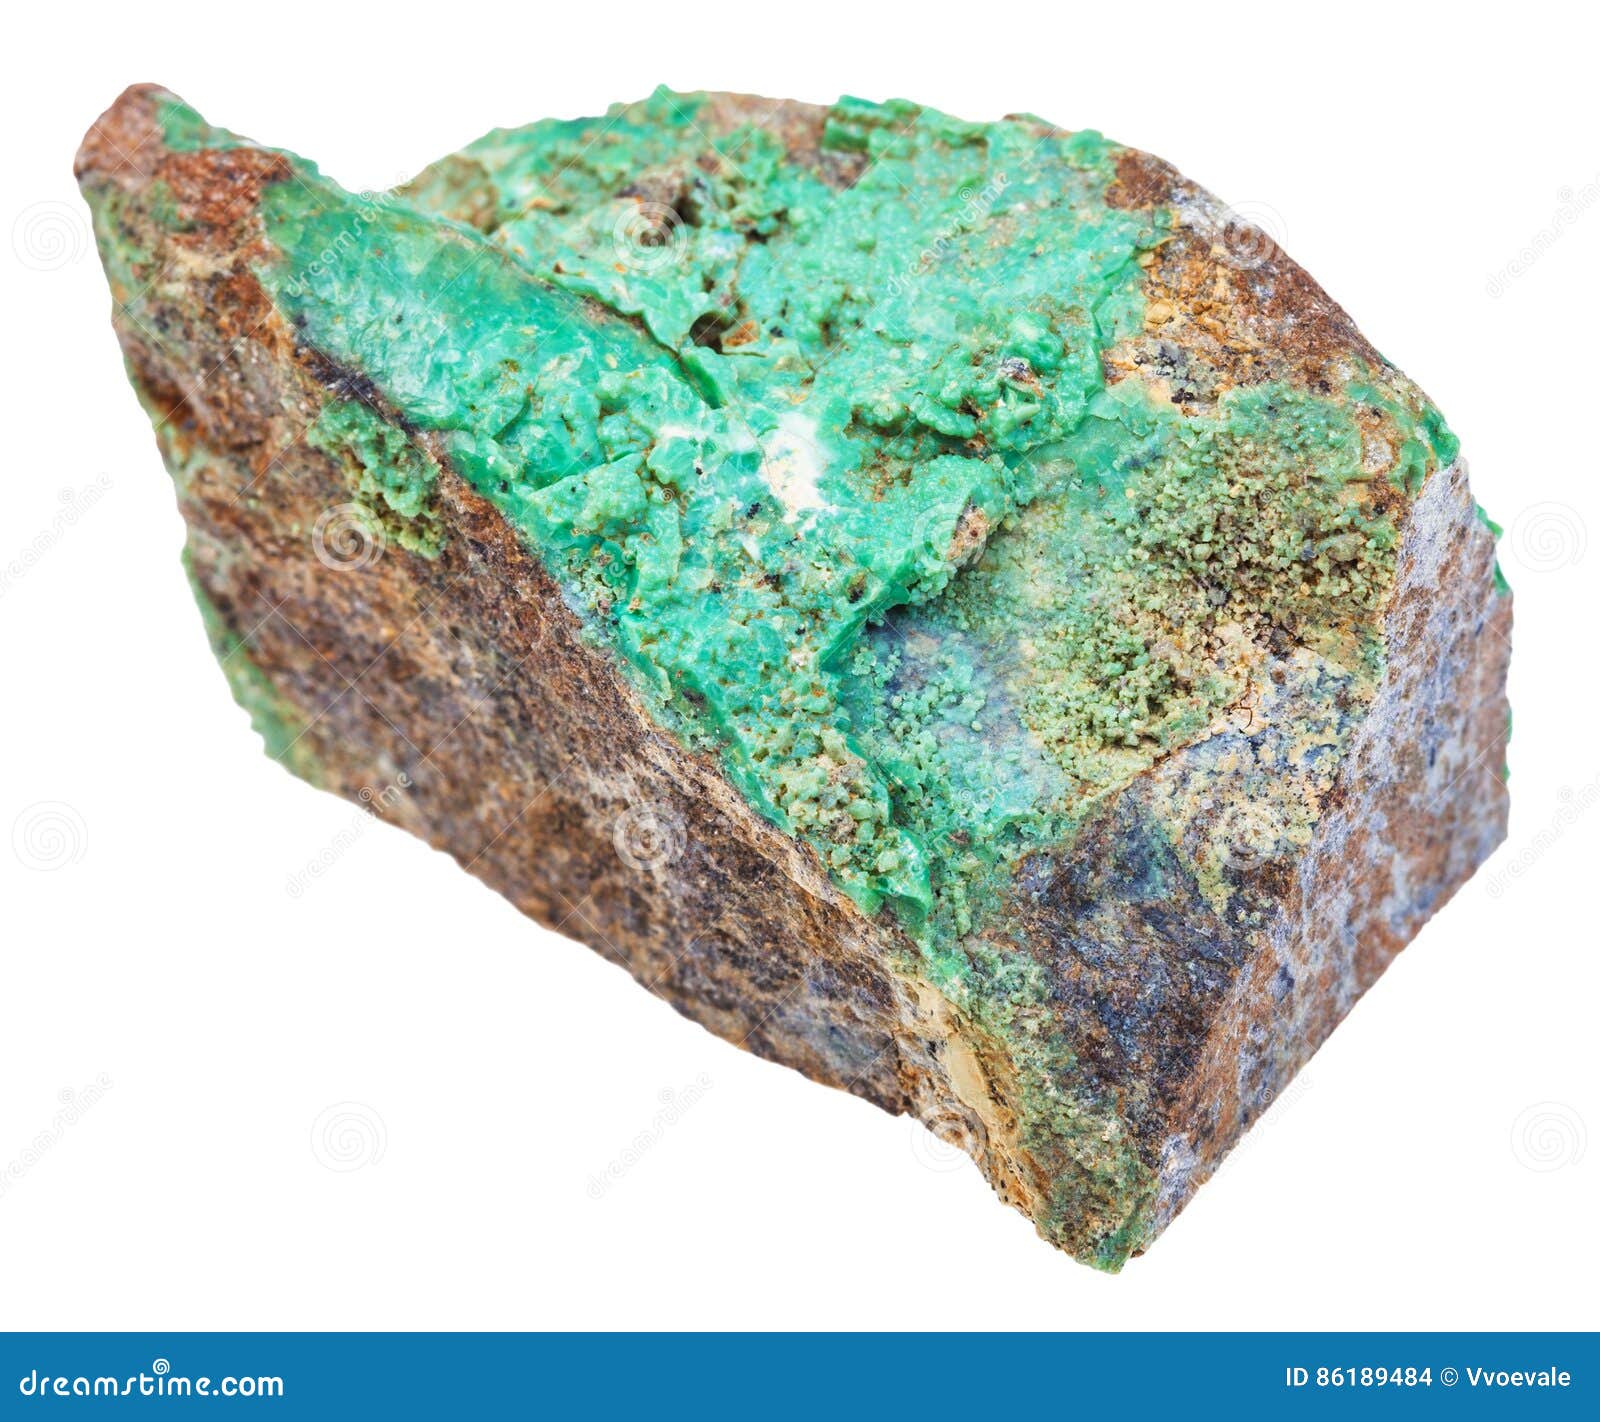 green garnierite stone nickel ore 